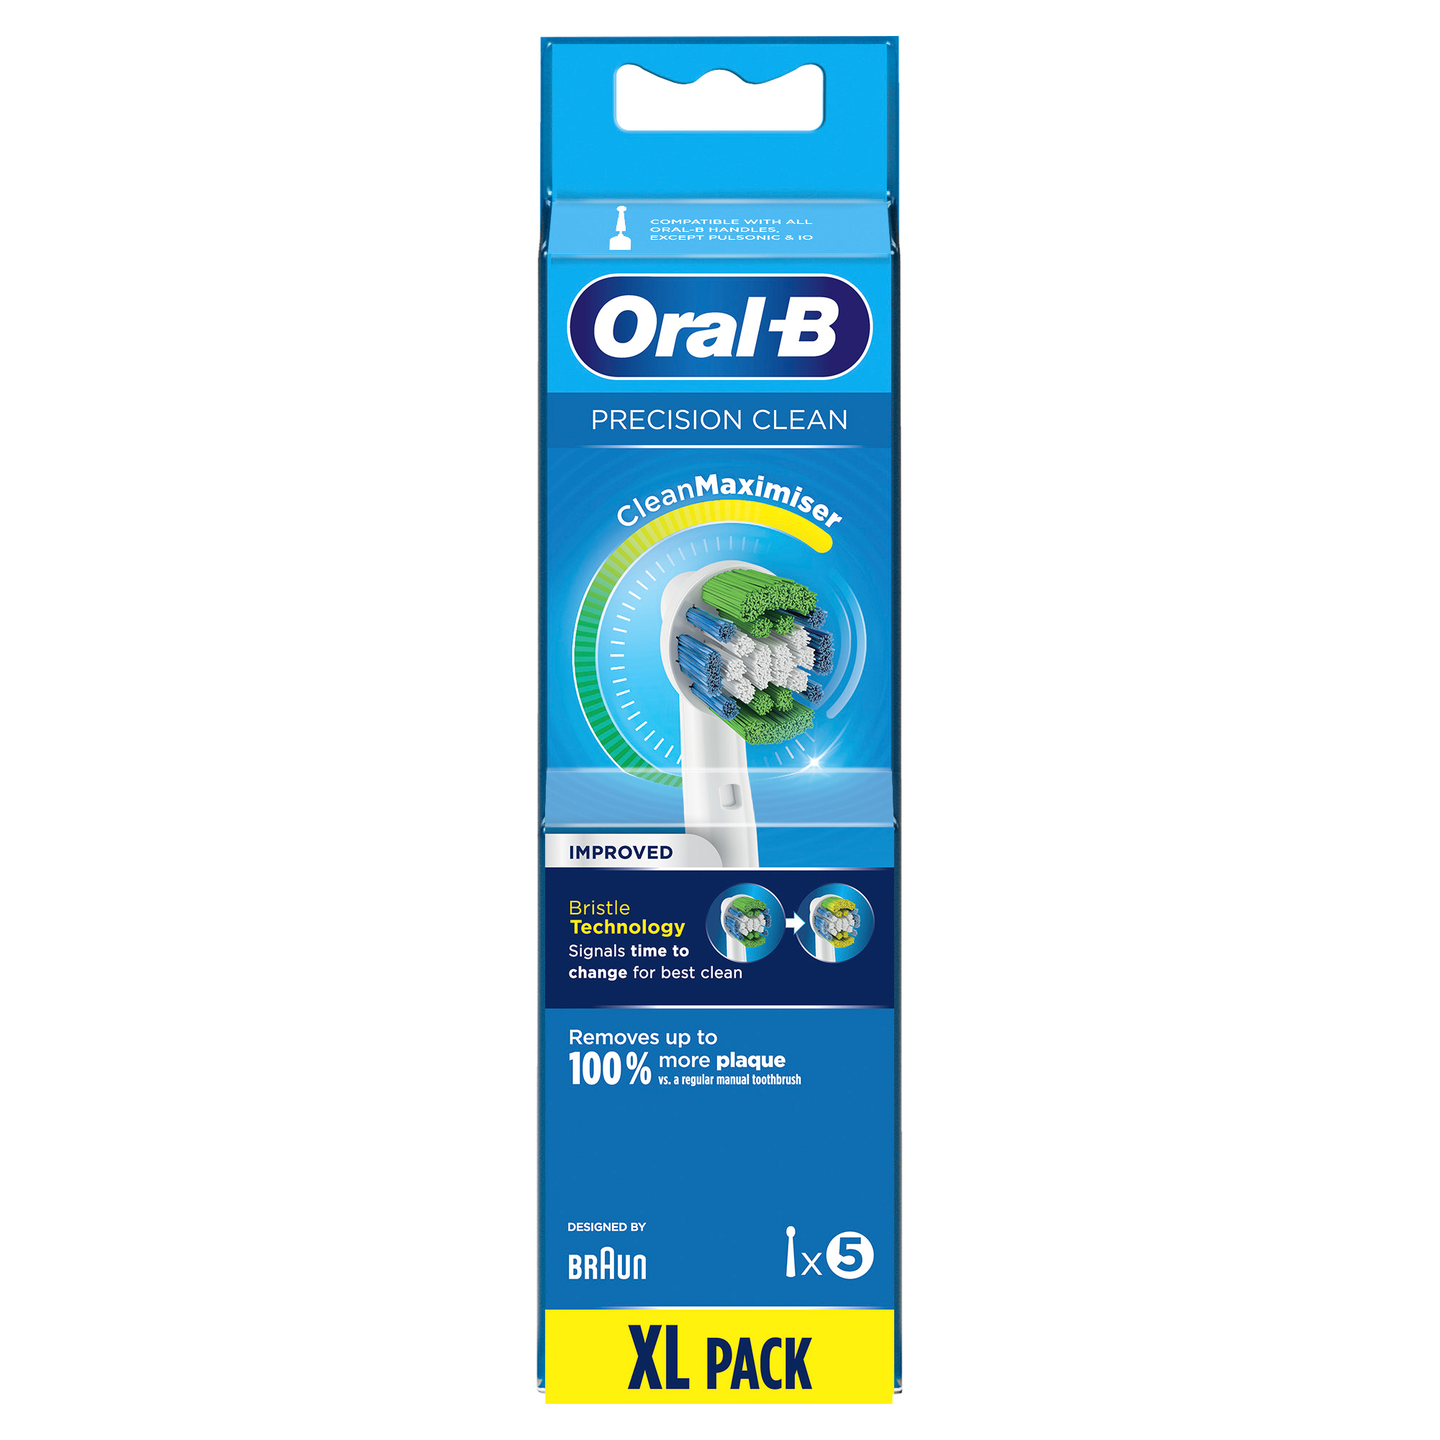 Oral-B Precision Clean vaihtoharja 5 kpl